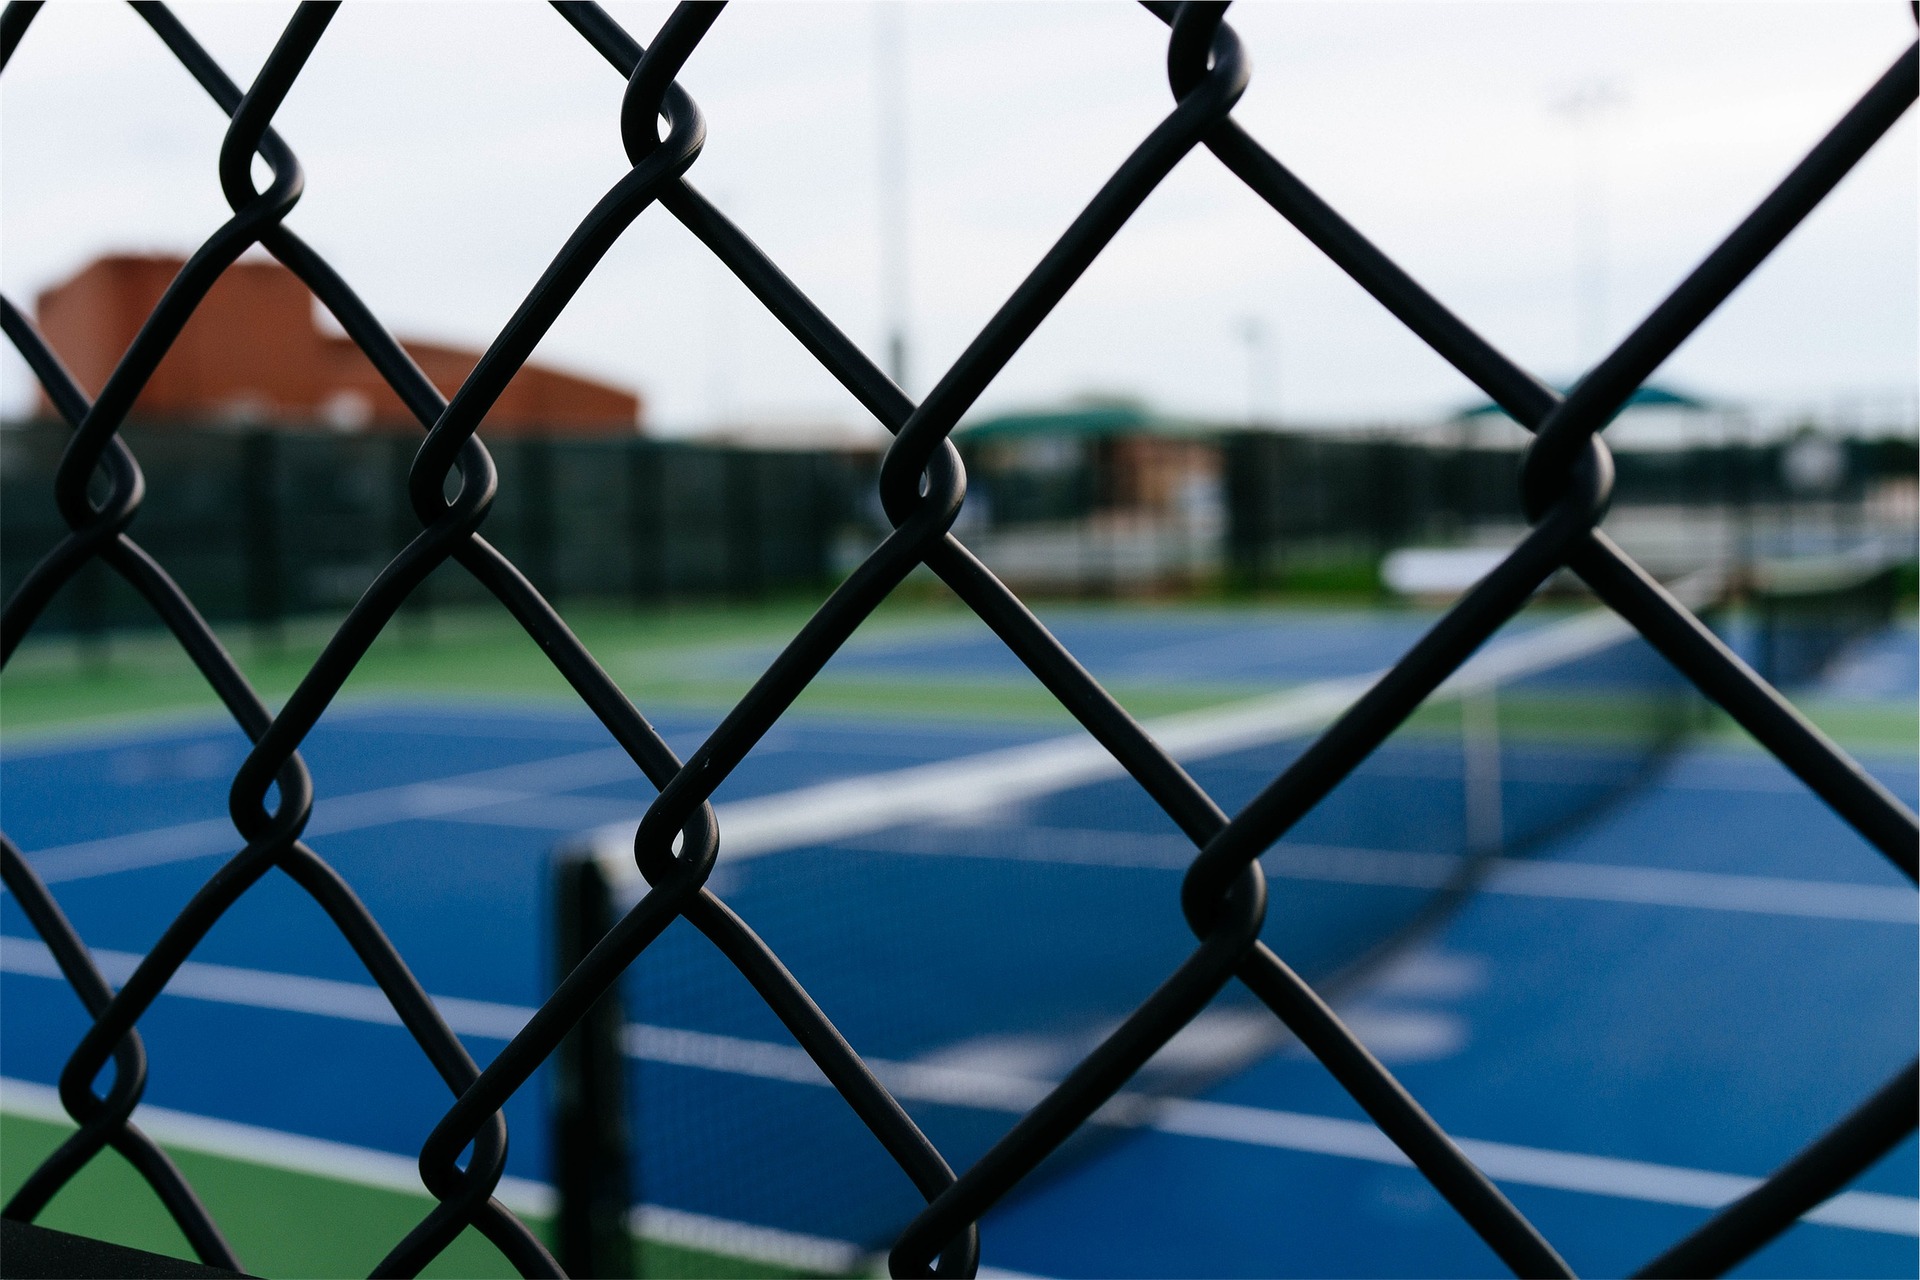 Tennis court seen through the fence